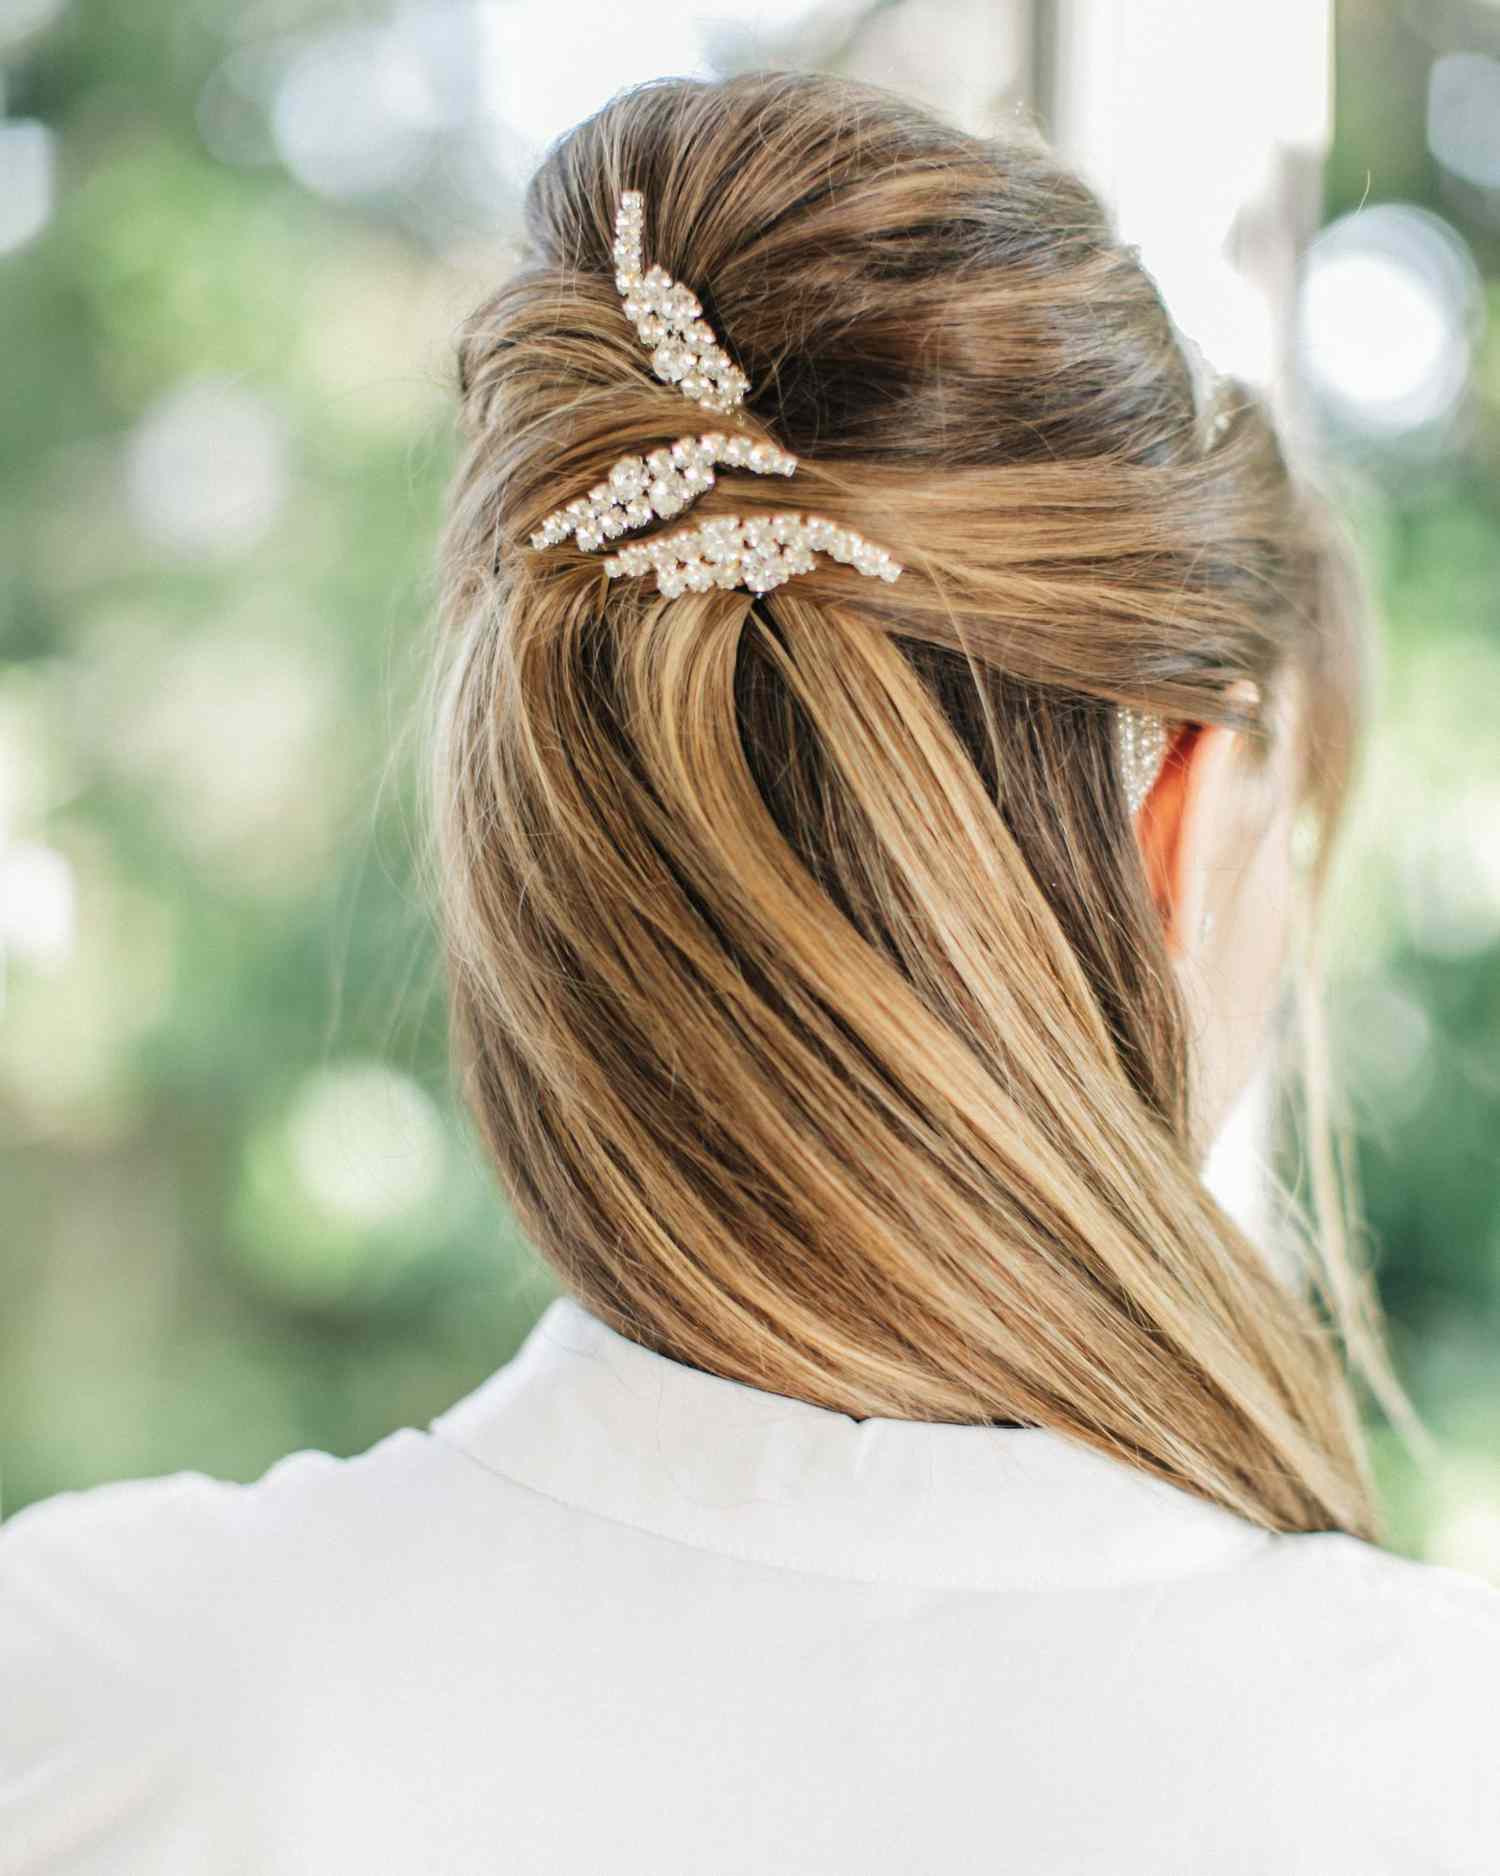 20 Ways to Wear a Short Hairstyle on Your Wedding Day   Martha Stewart